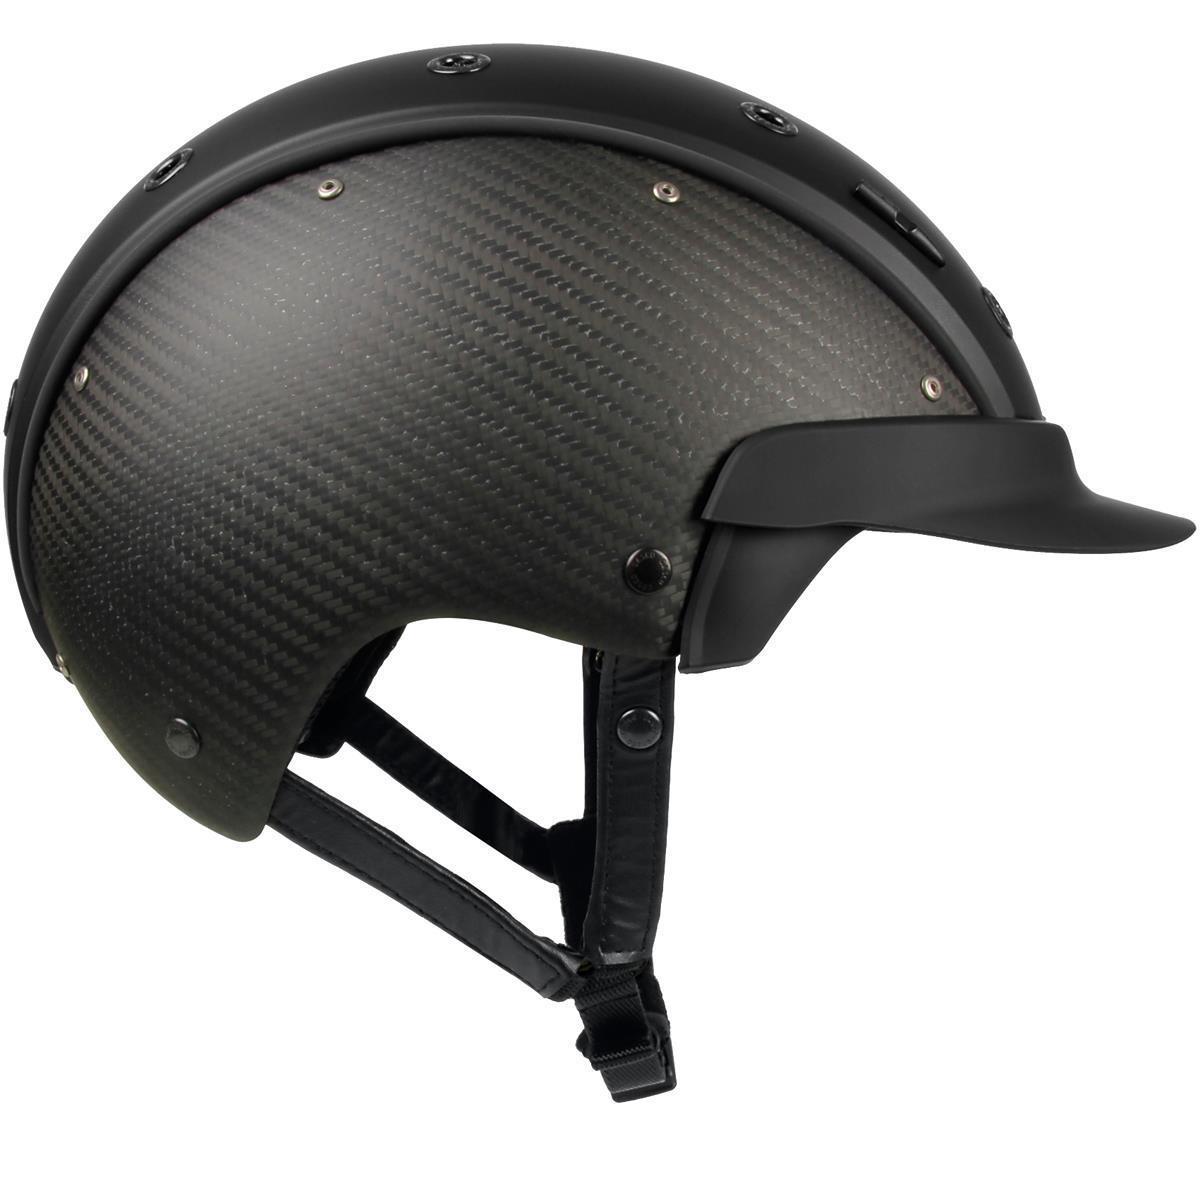 Casco MASTER 6 carbon riding helmet